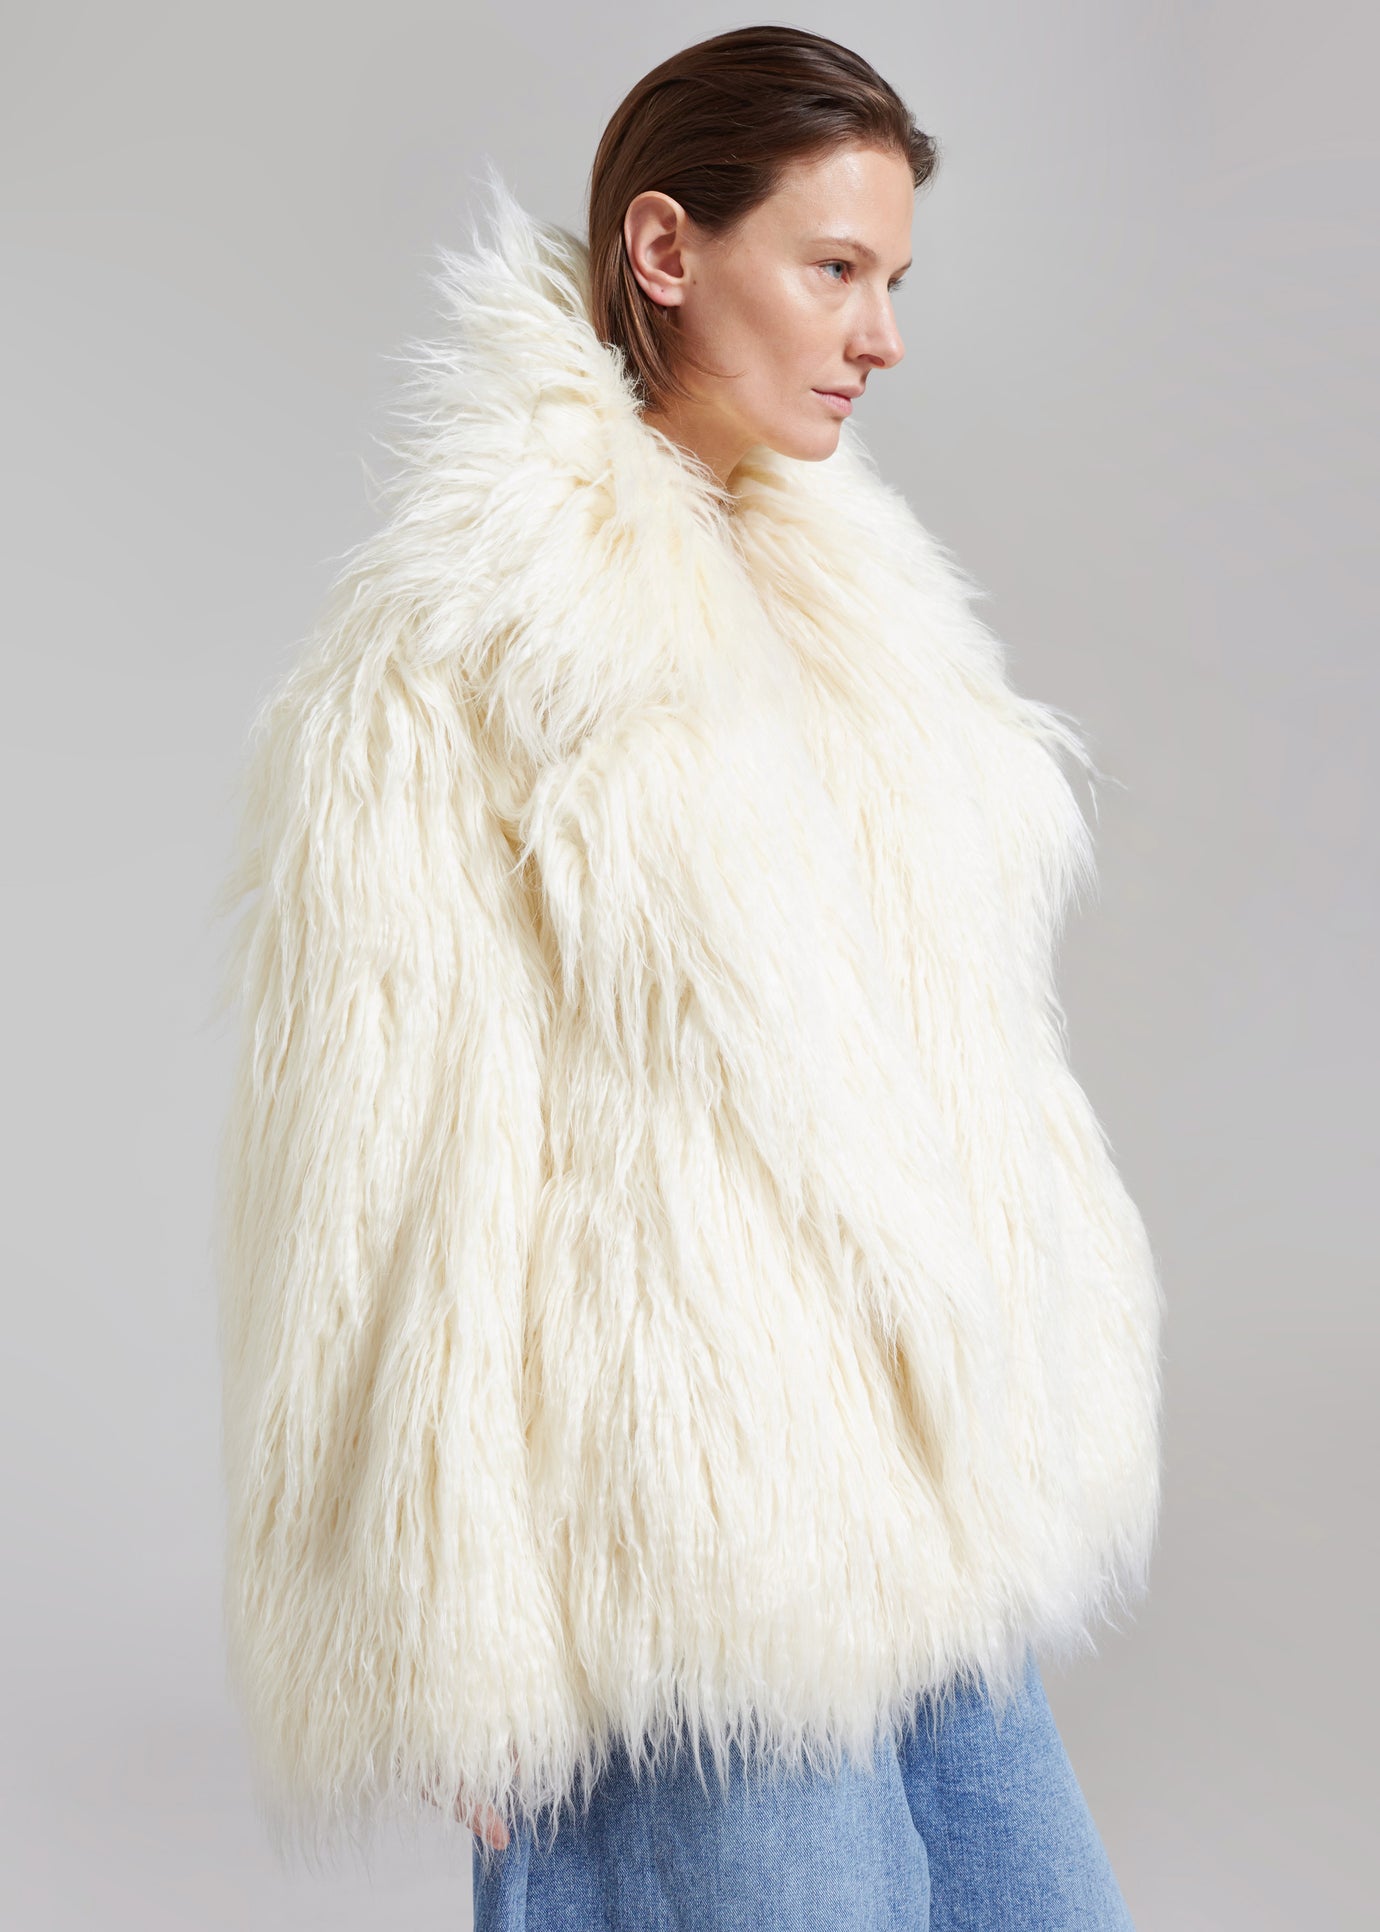 The Frankie Shop Joni Faux Fur Coat